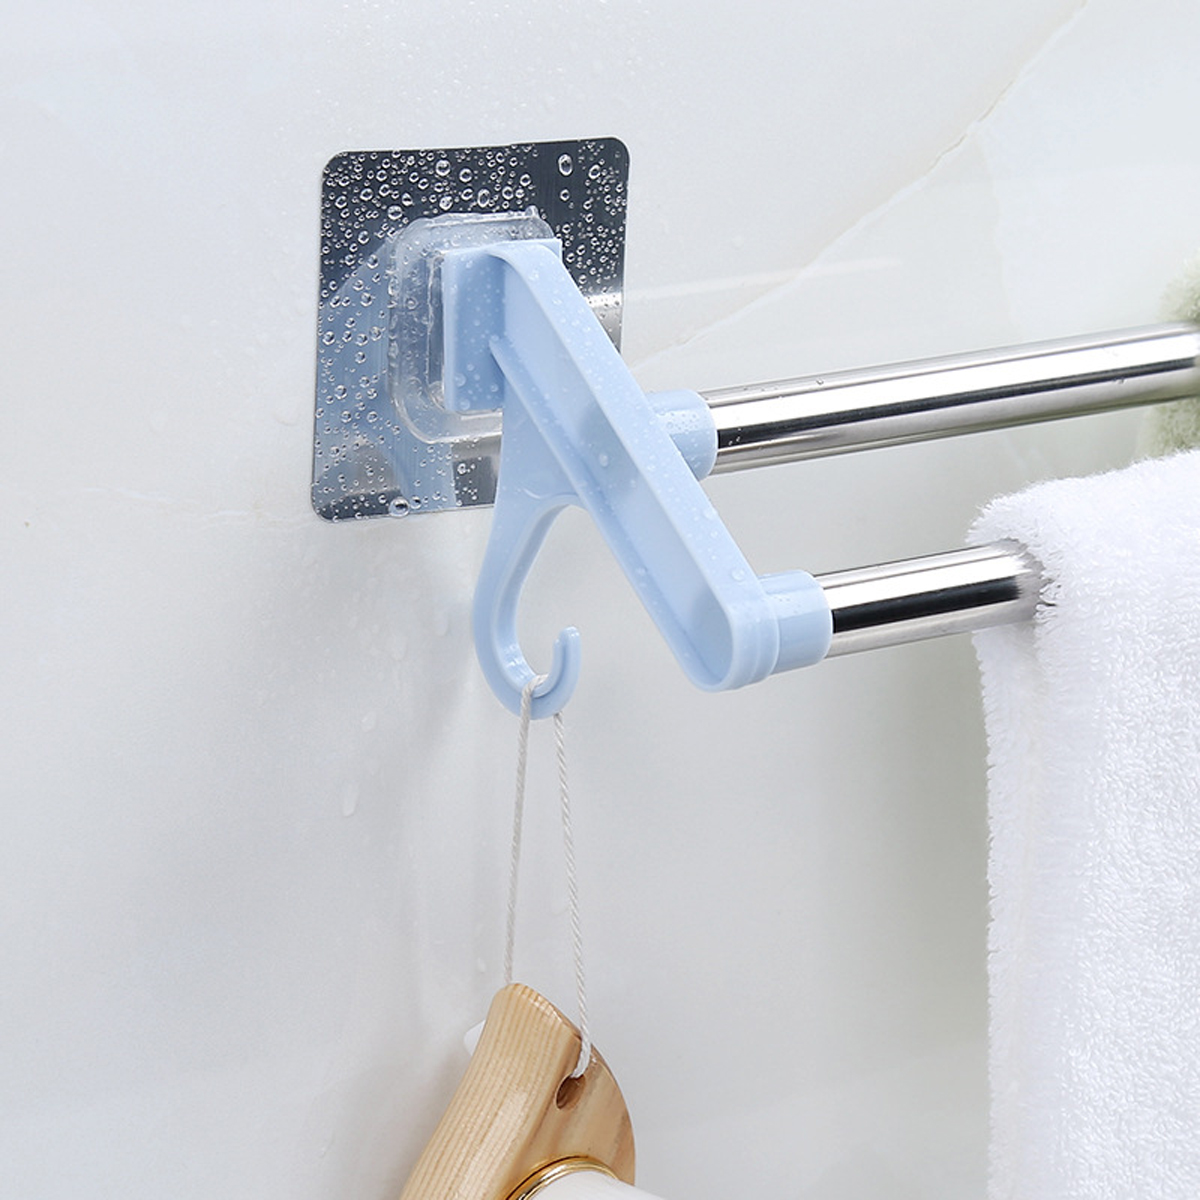 Suction-Cup-Bathroom-Kitchen-Double-Towel-Holder-Rack-Rail-Shelf-Rack-Hanger-Bar-1312699